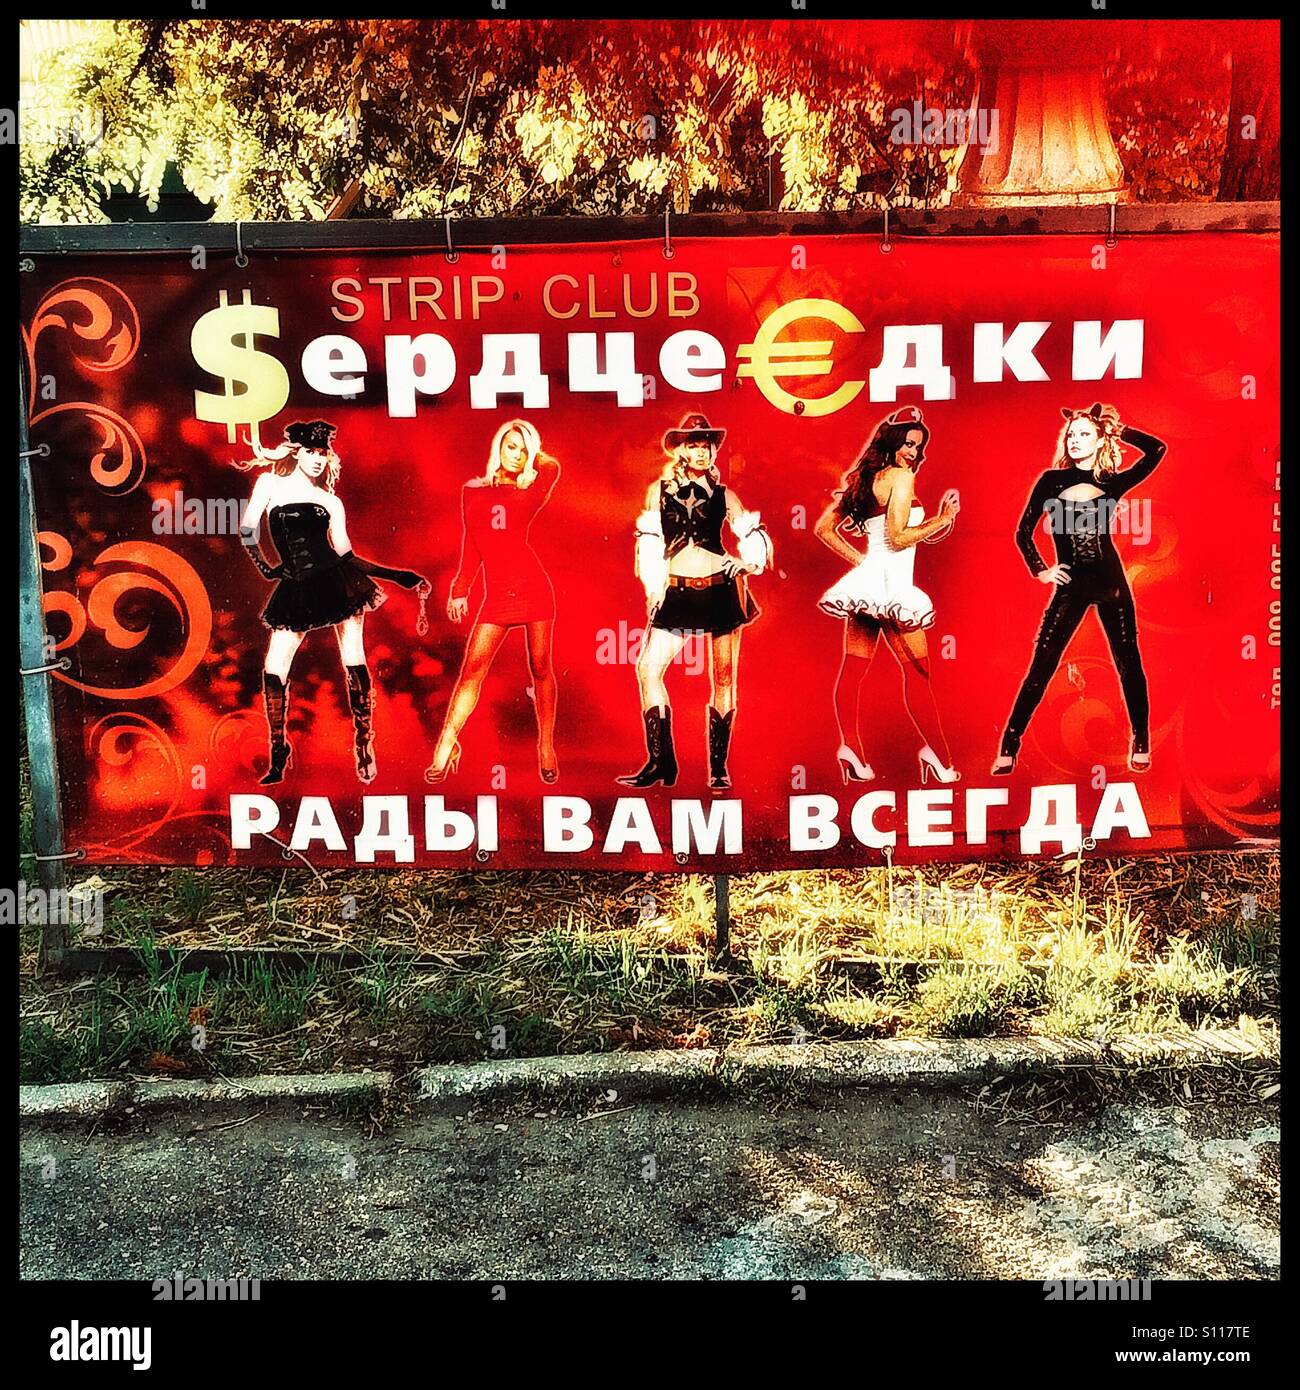 Strip club advert, Sebastopol, Crimea Stock Photo